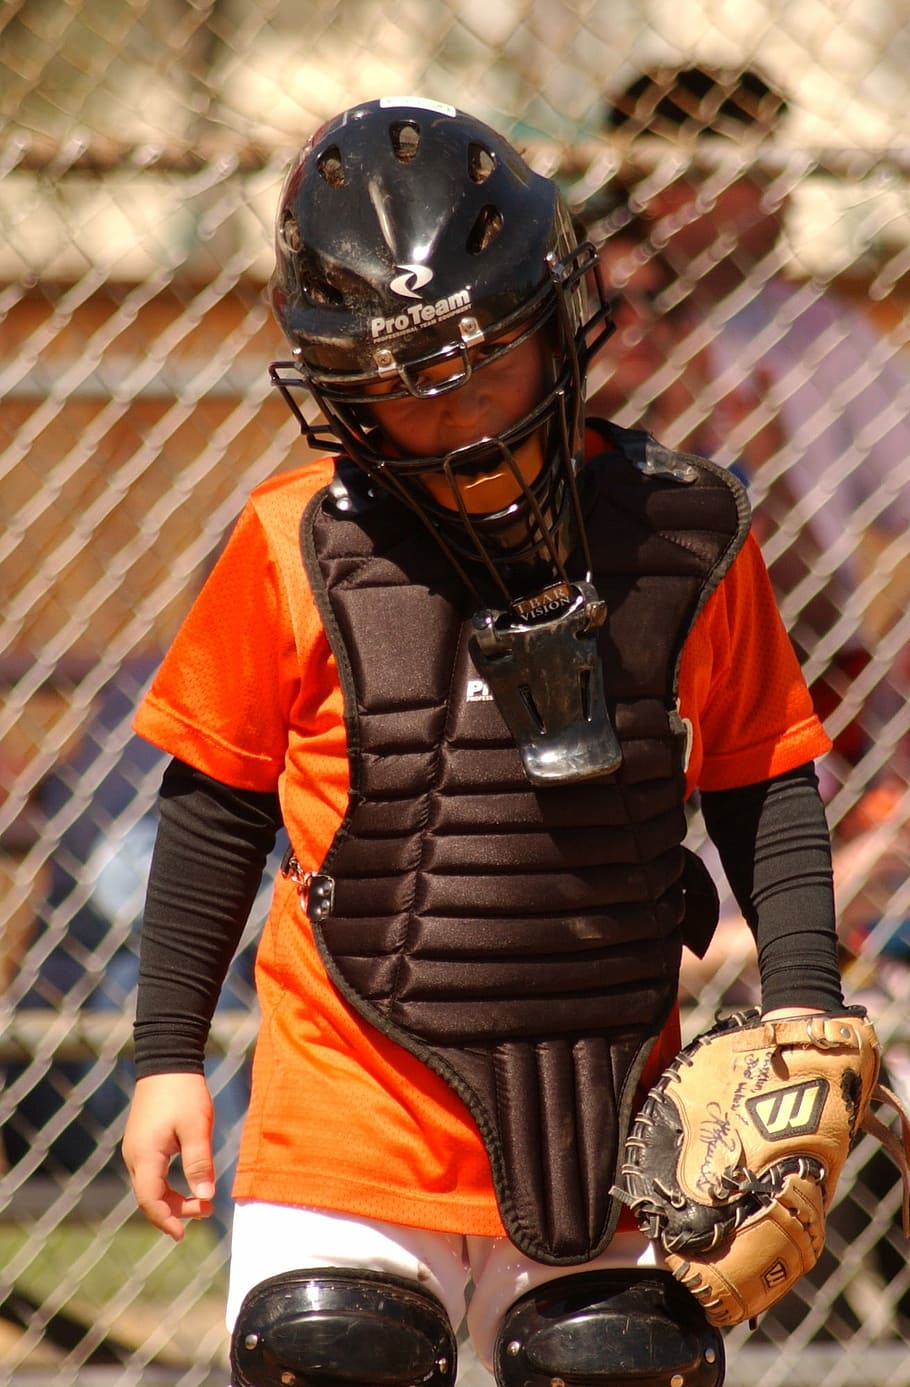 2544x1696  action athlete baseball game girl helmet outdoors play  player sport uniform wallpaper  Coolwallpapersme